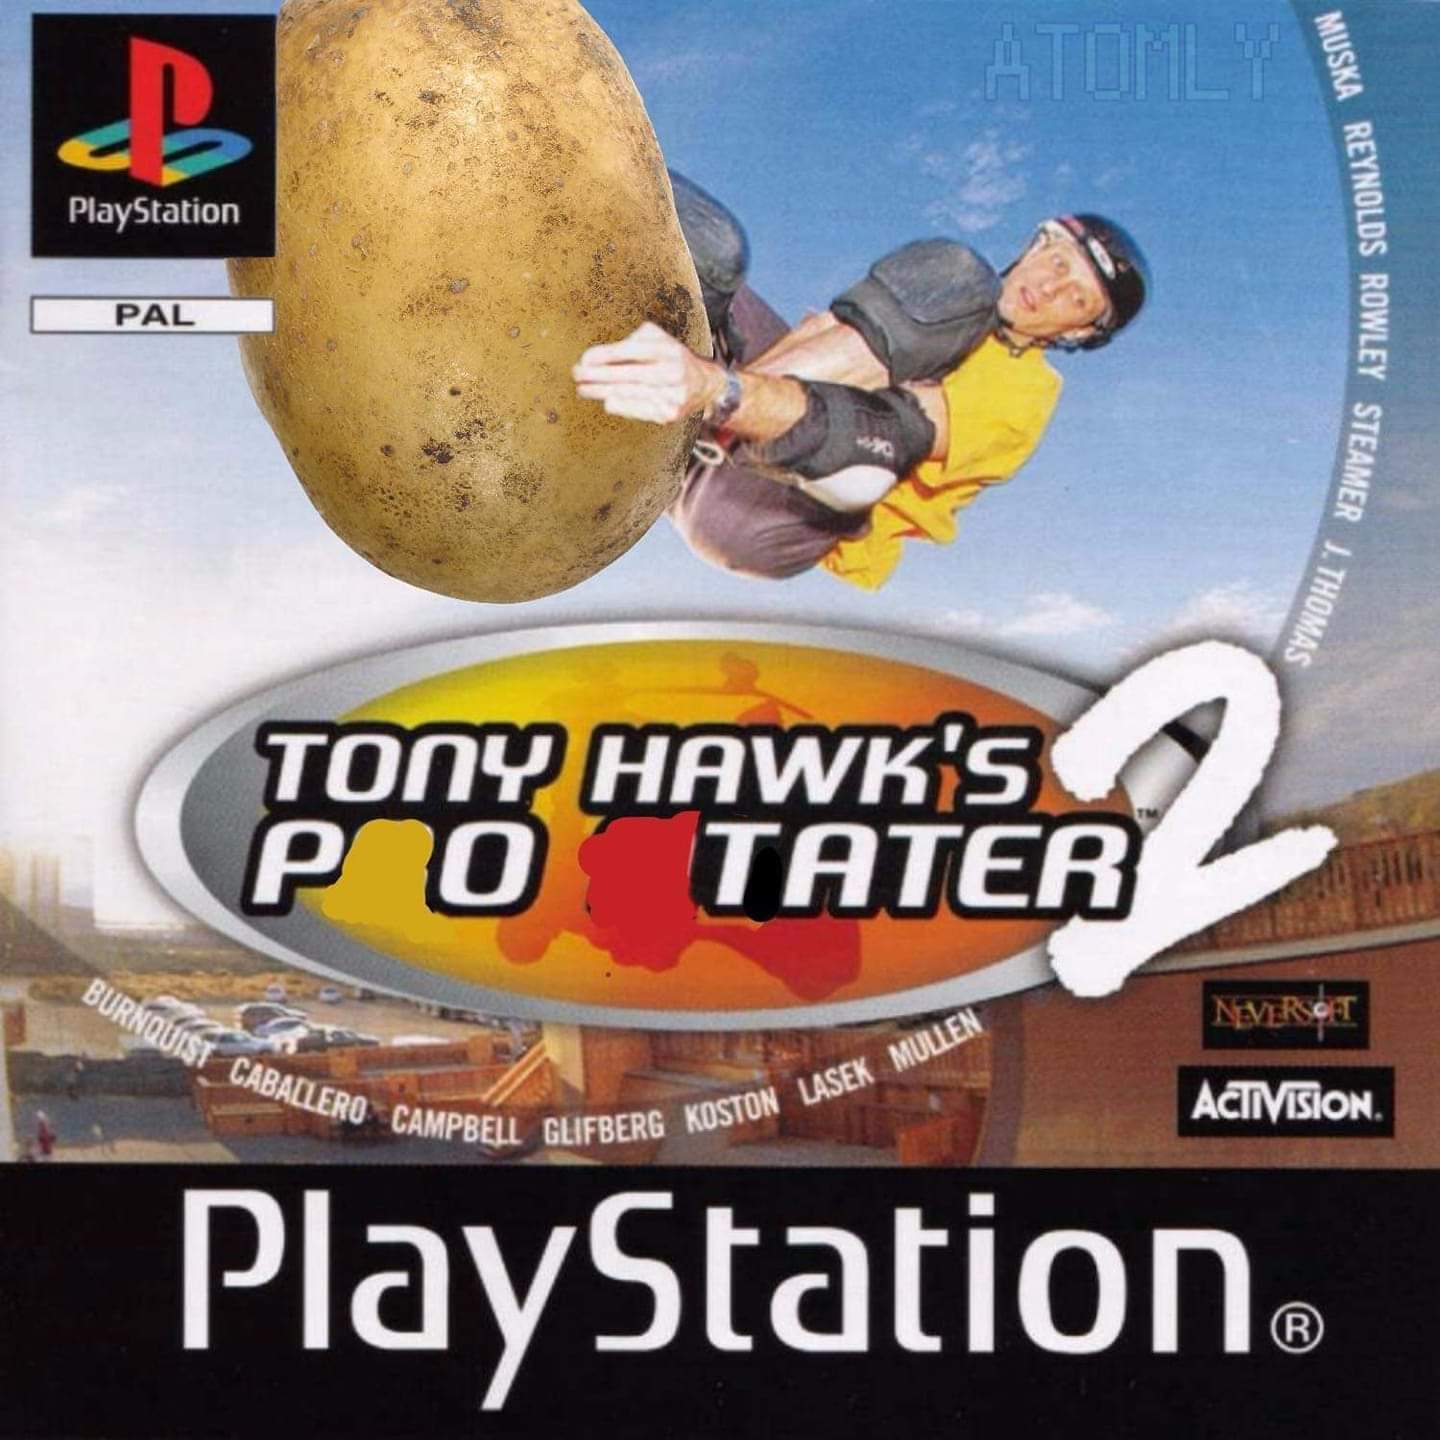 tony hawk's pro tater 2 potato